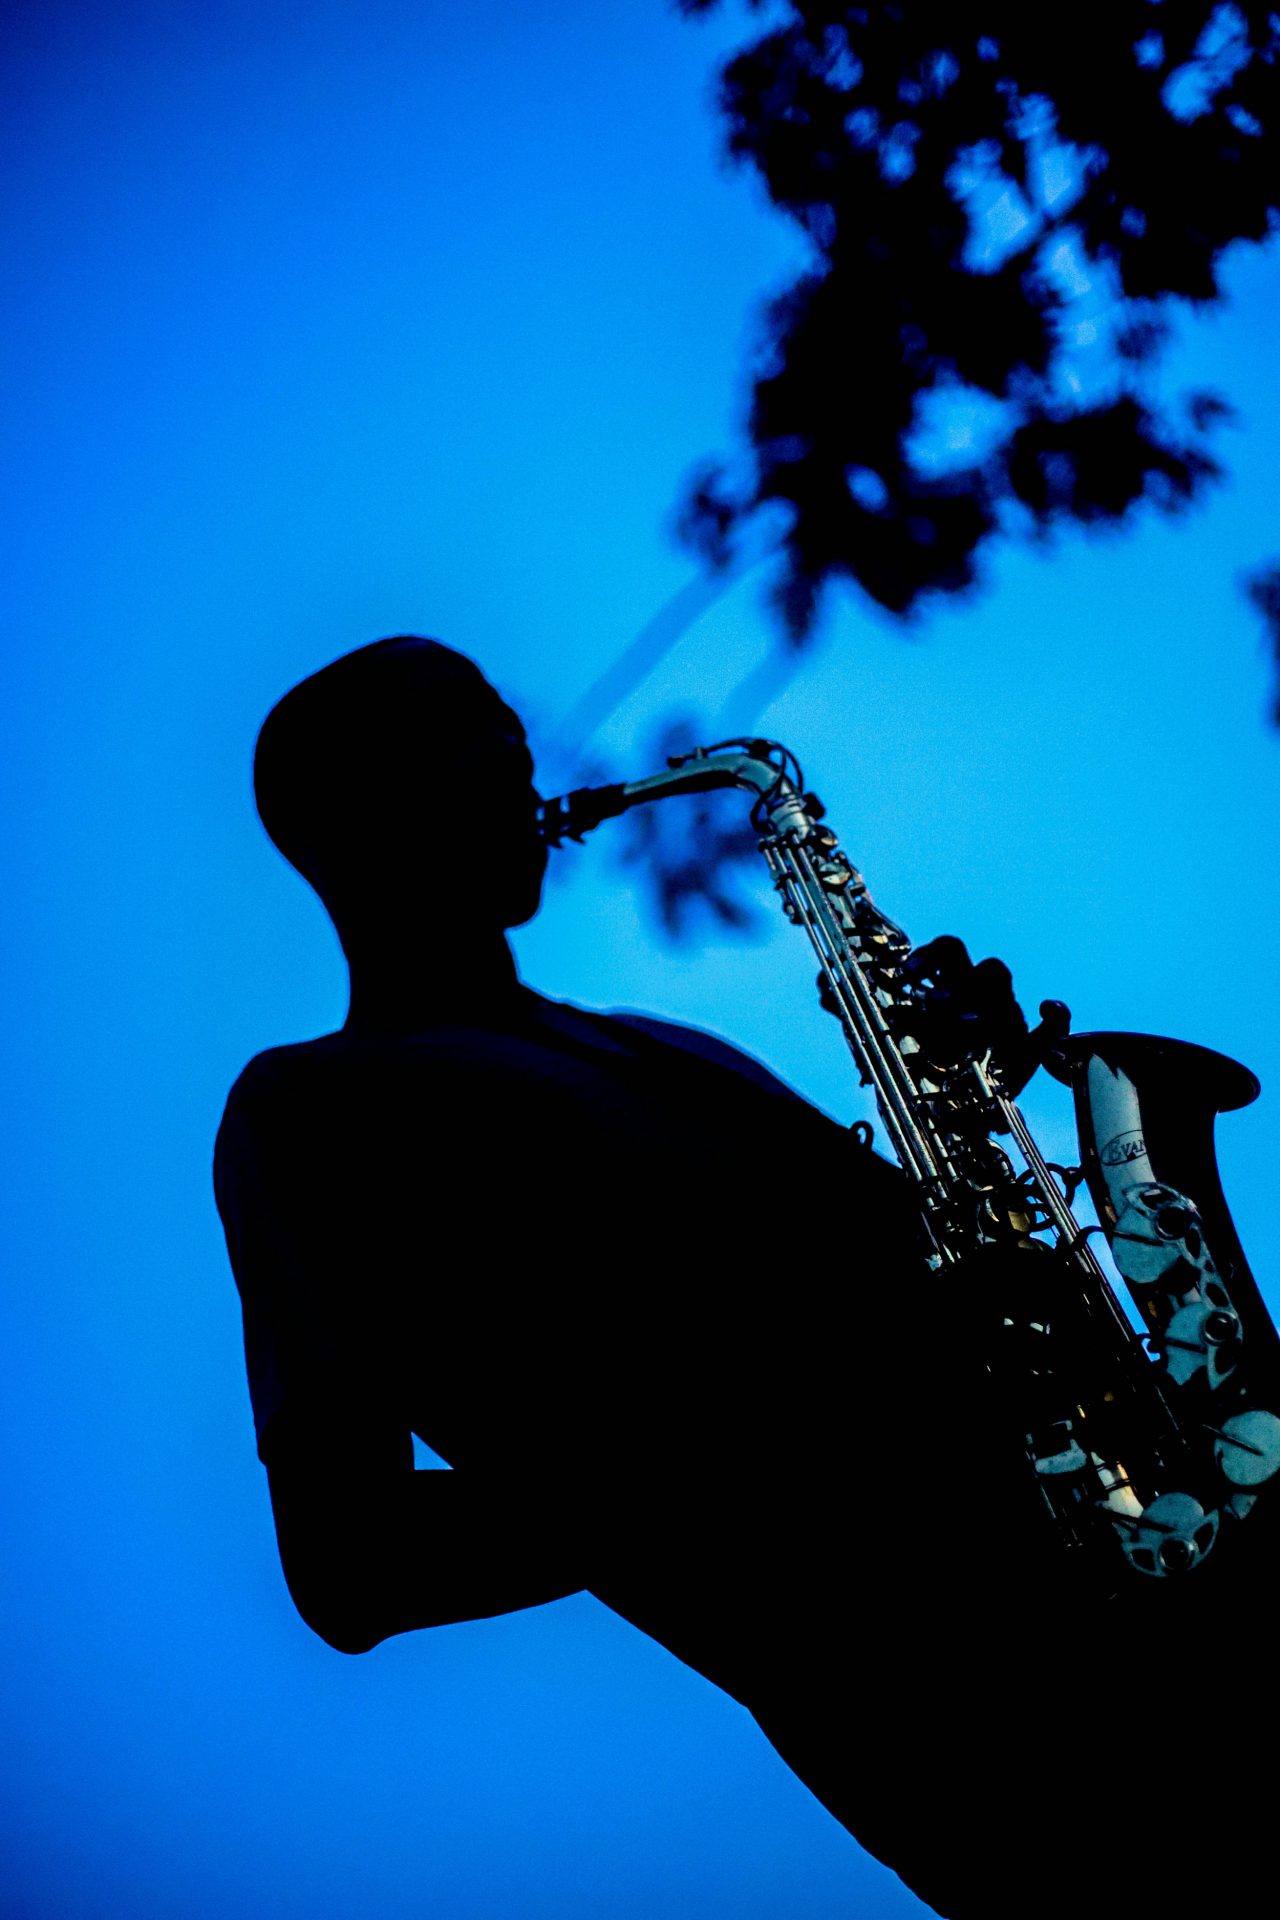 silhouette of a saxophone player on a blue background, Gracious Adebayo via Unsplash